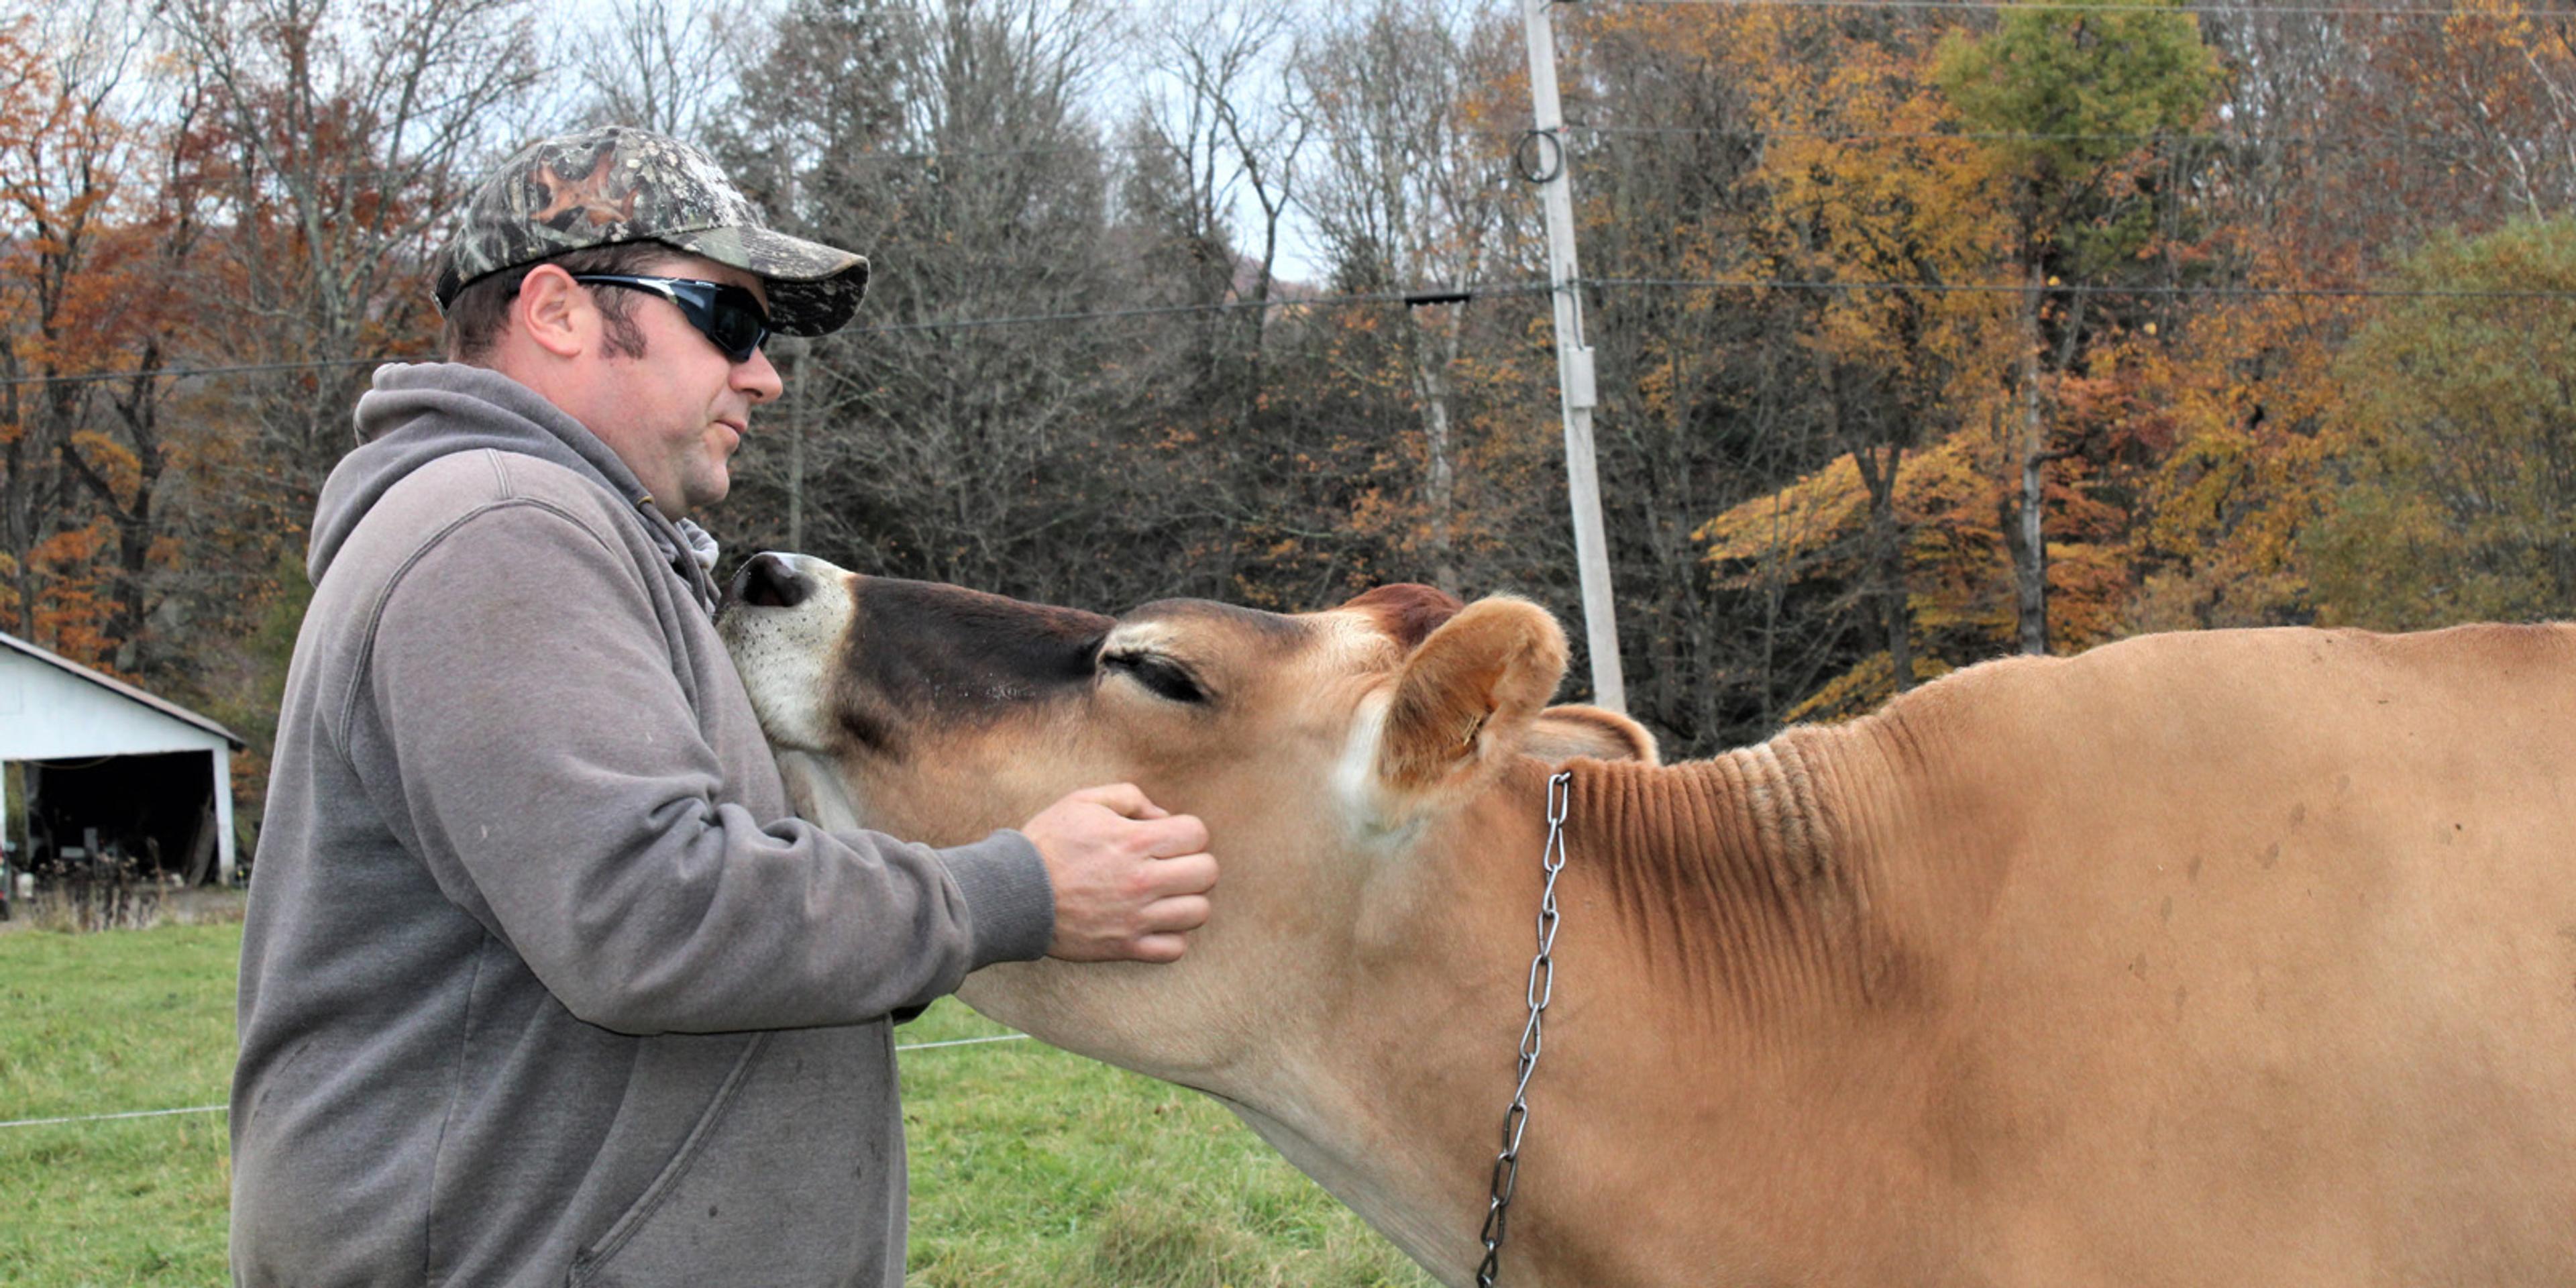 A farmer wearing sunglasses pets a cow.